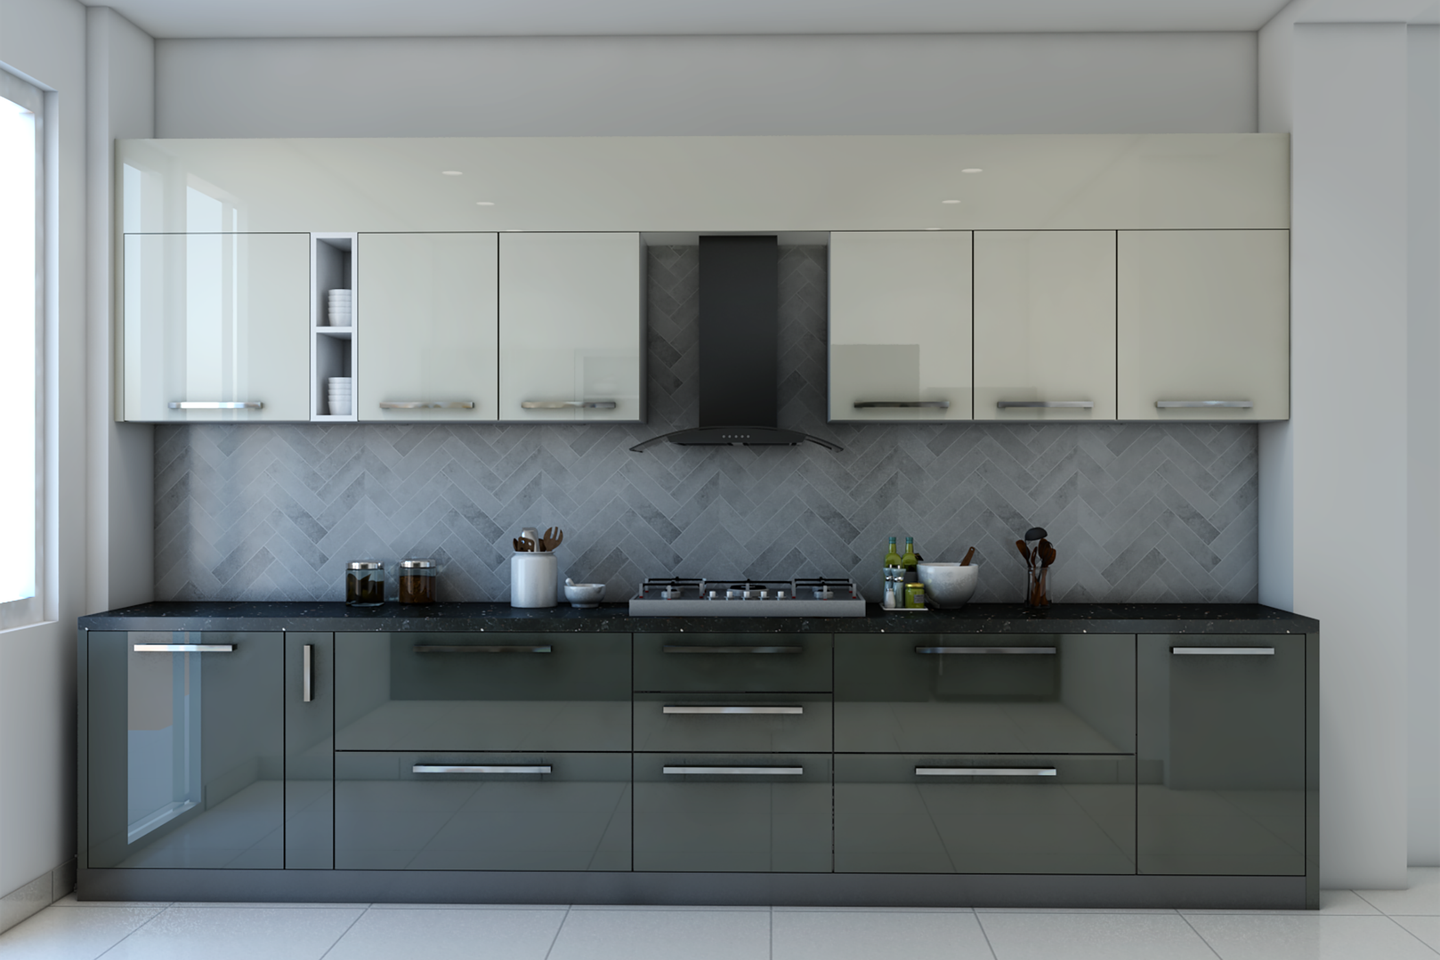 Modular Kitchen Design In Grey And White - Livspace